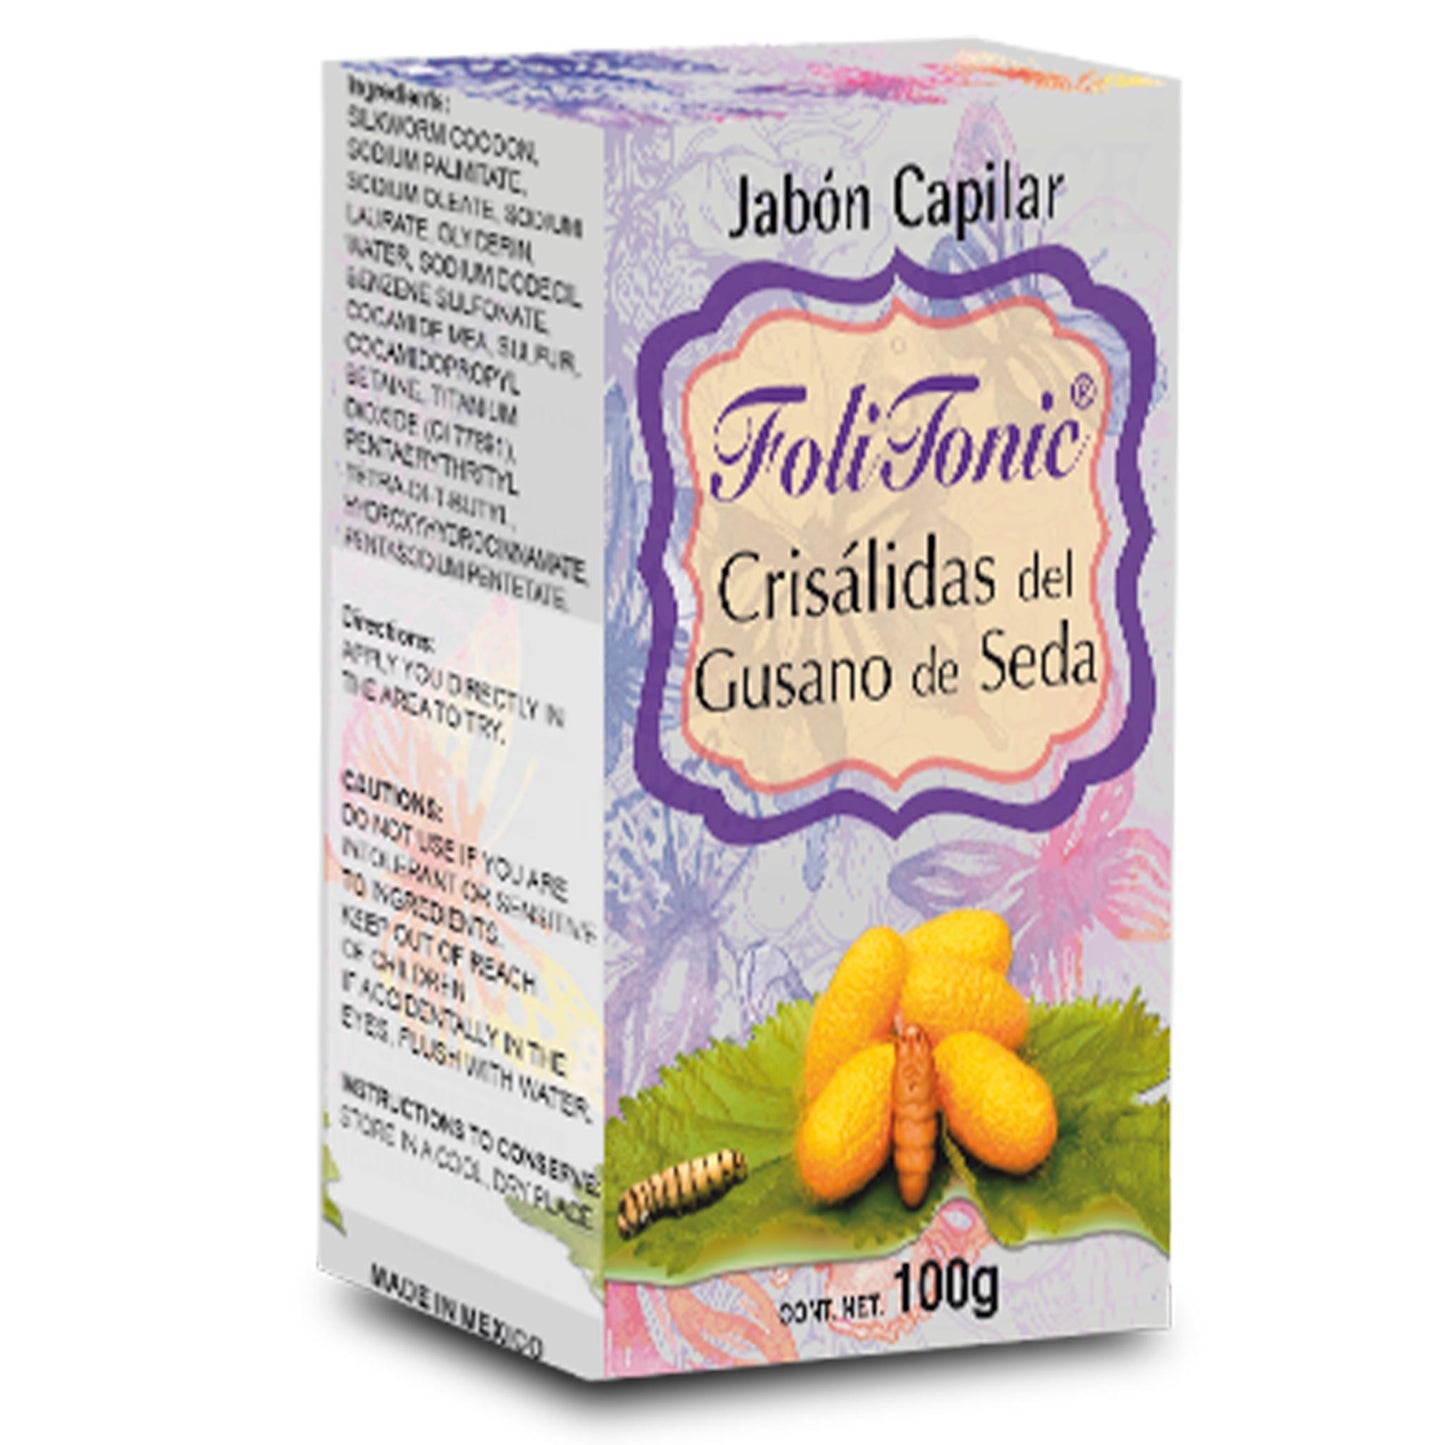 FOLITONIC ® jabón capilar 100g